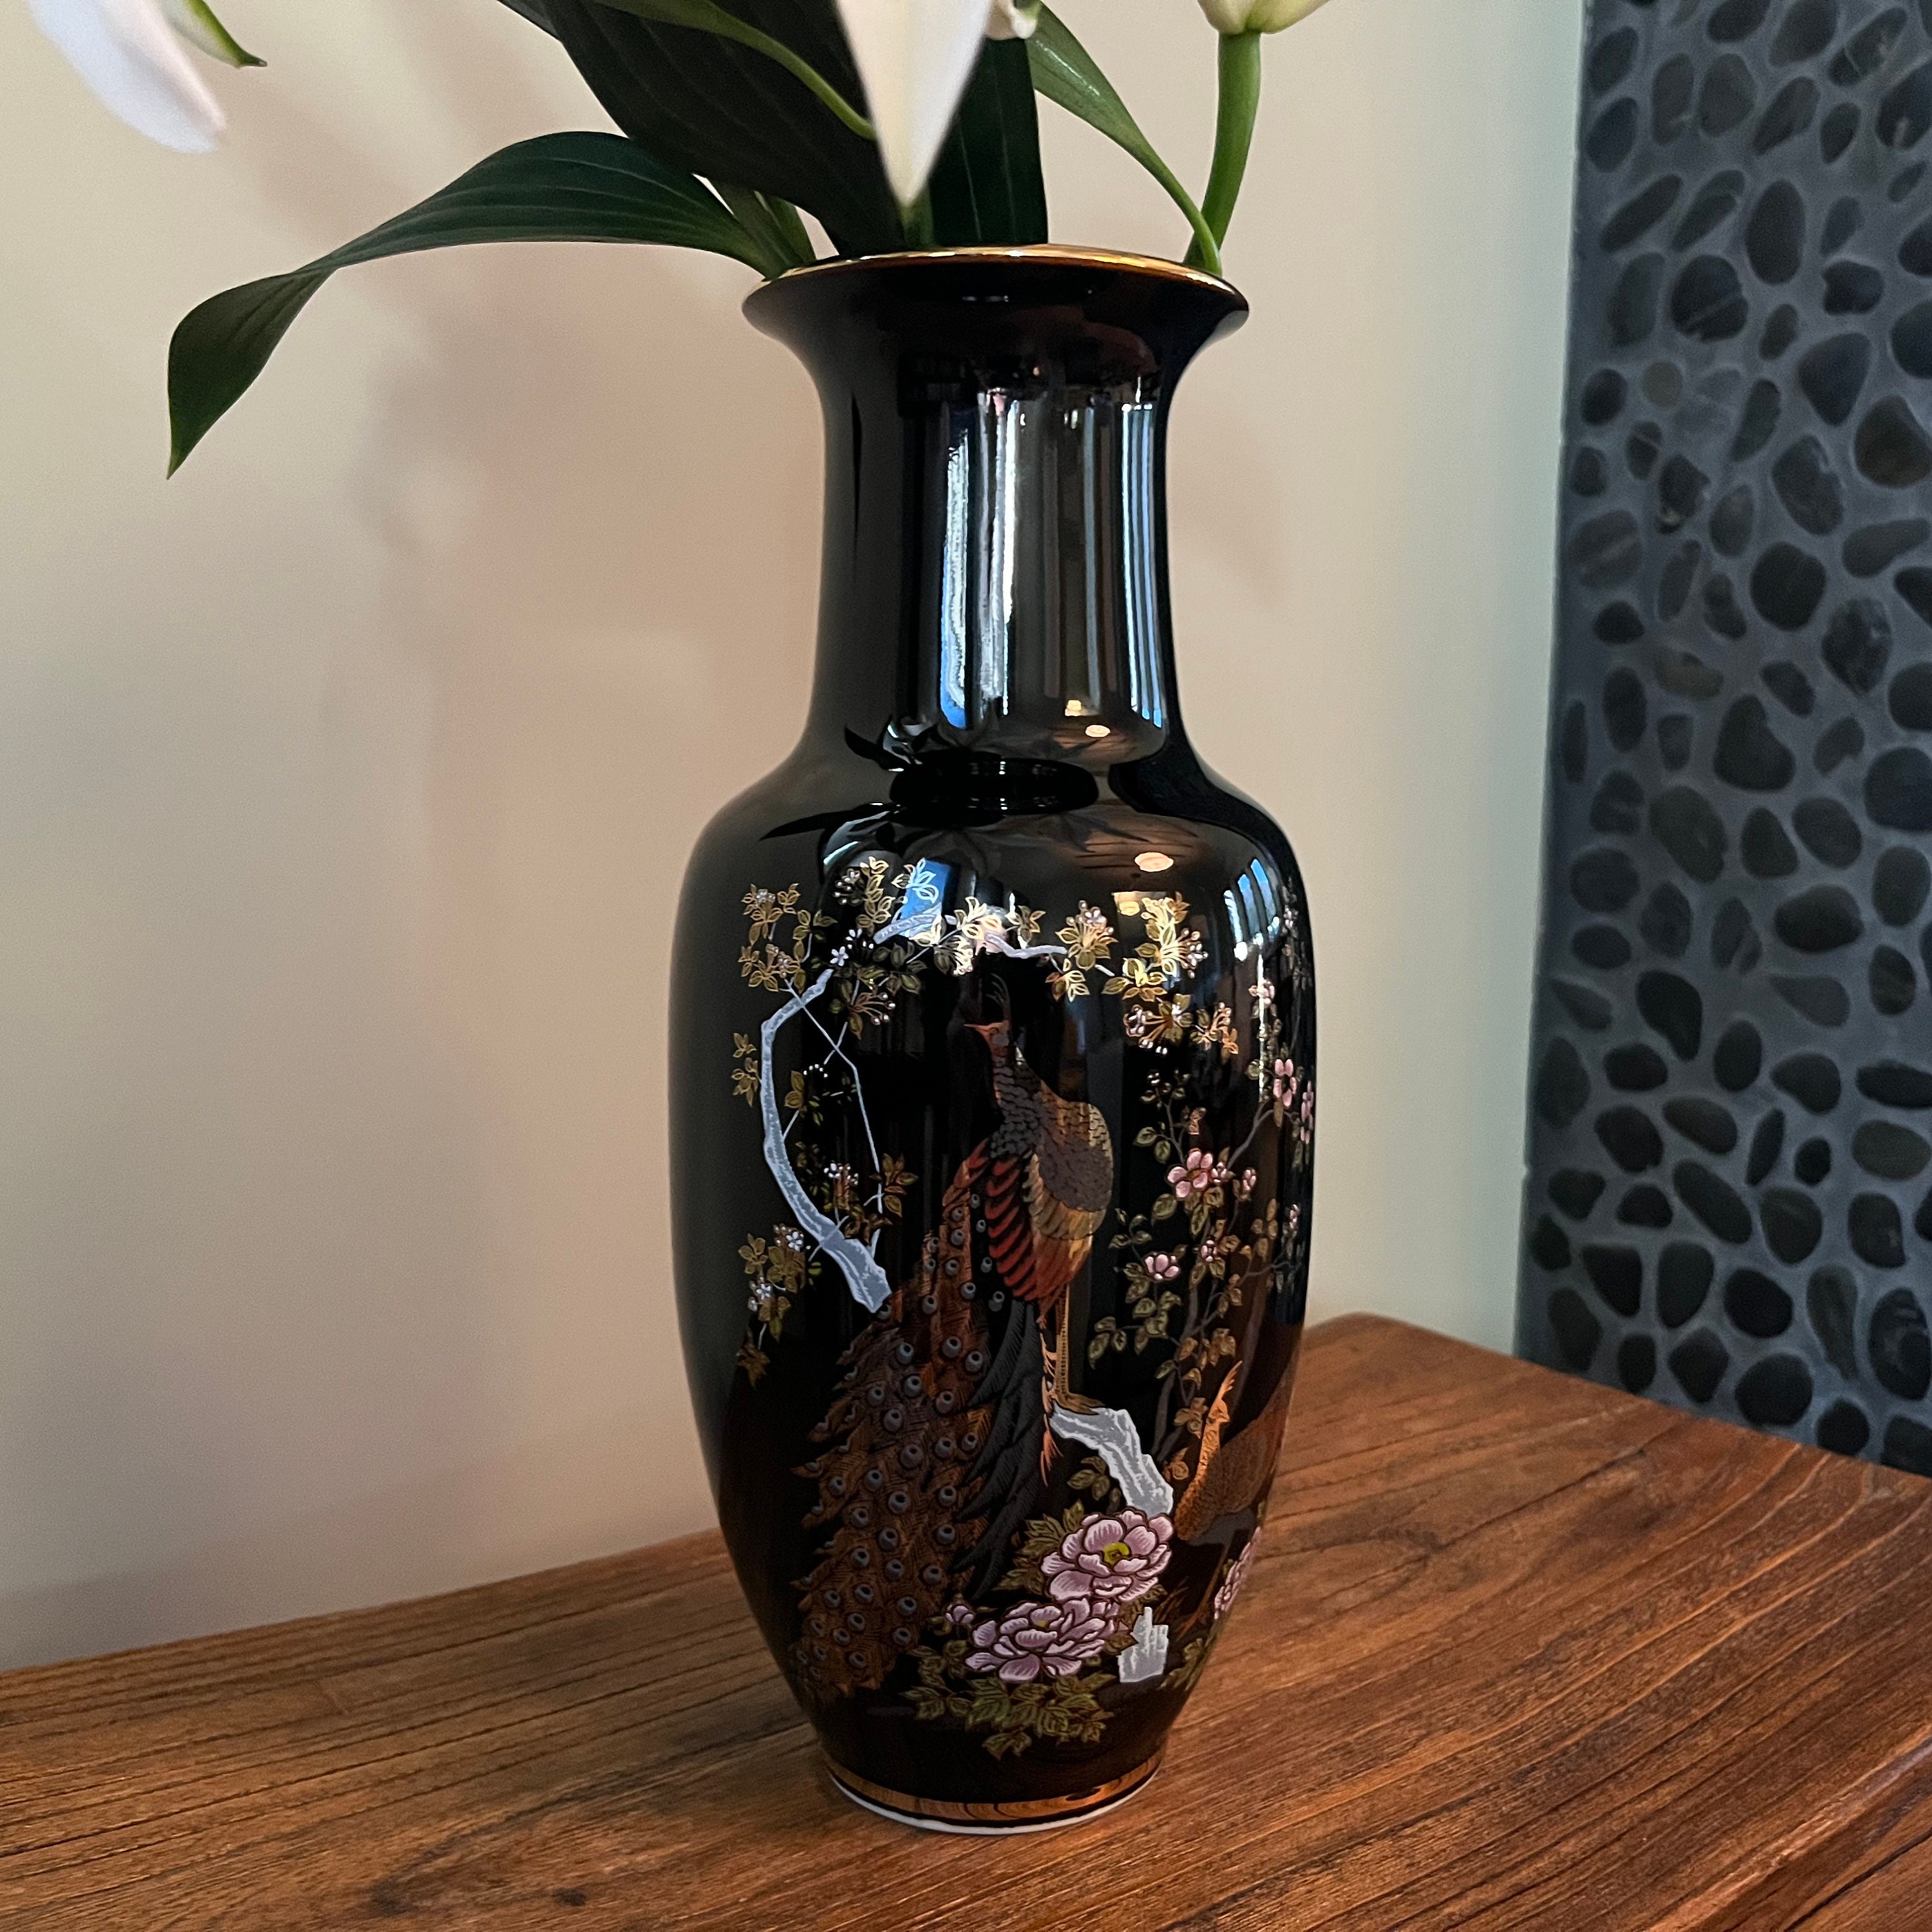 12 12 cm Modern Vintage Vase for Home Office Large Room Dimensions Table Model Mong 20 Black Velvet Studio Chinese Ceramic vase Decorative Color Floreado 